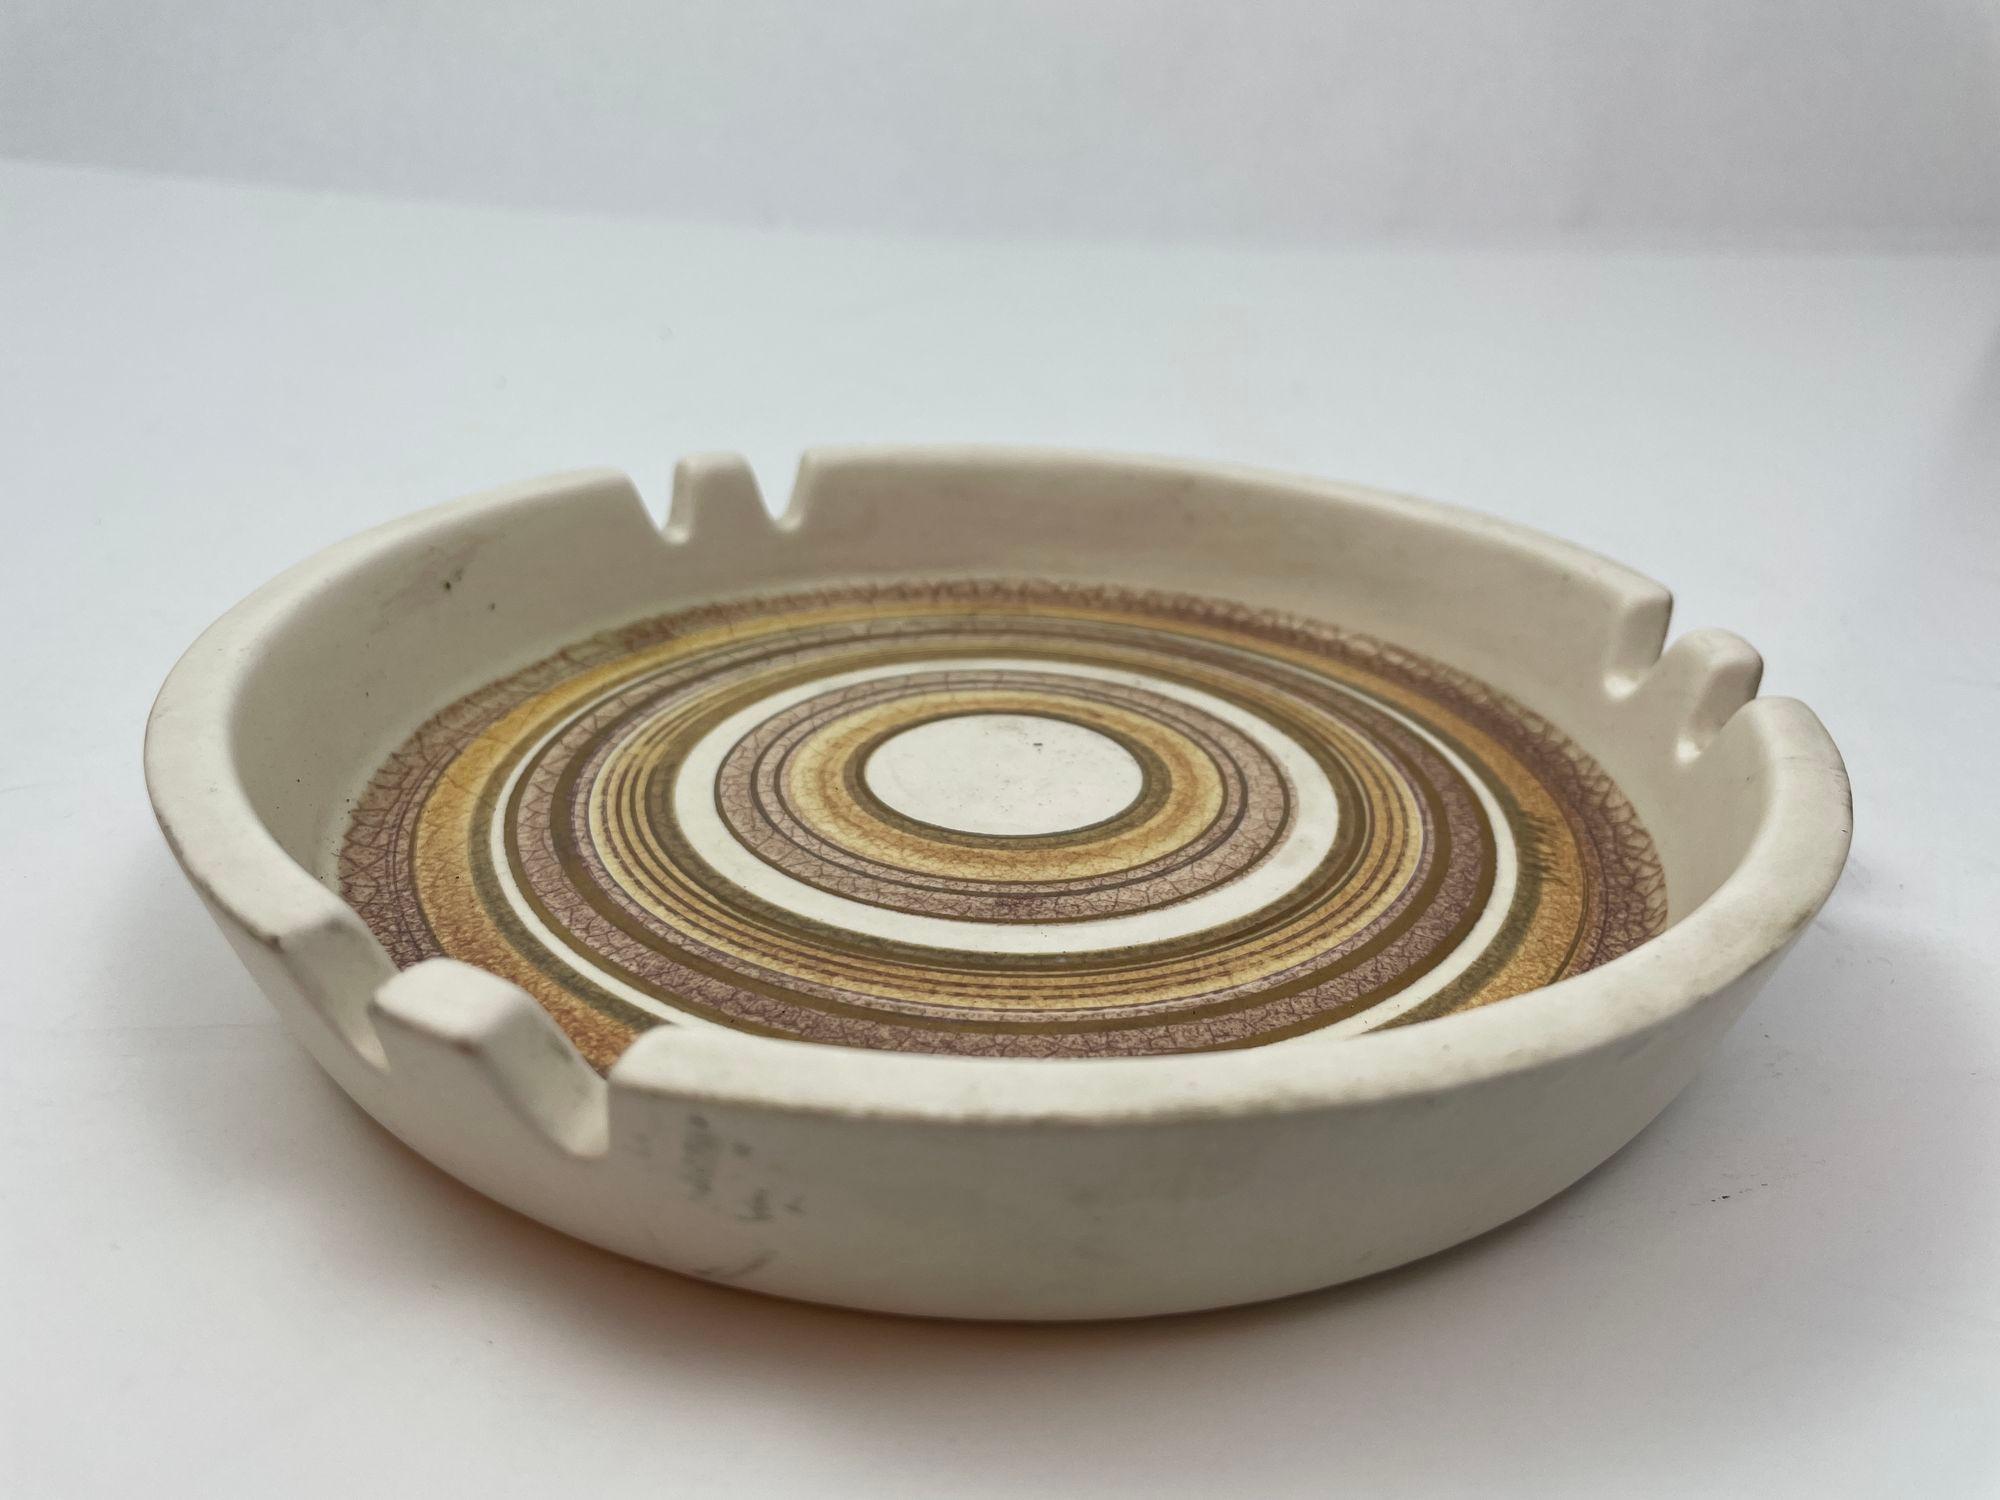 Mid Century Handmade Round Ceramic Ashtray signed by Sascha Brastoff.
Signed: Sascha Brastoff California #056A.
Dimensions: 1.25